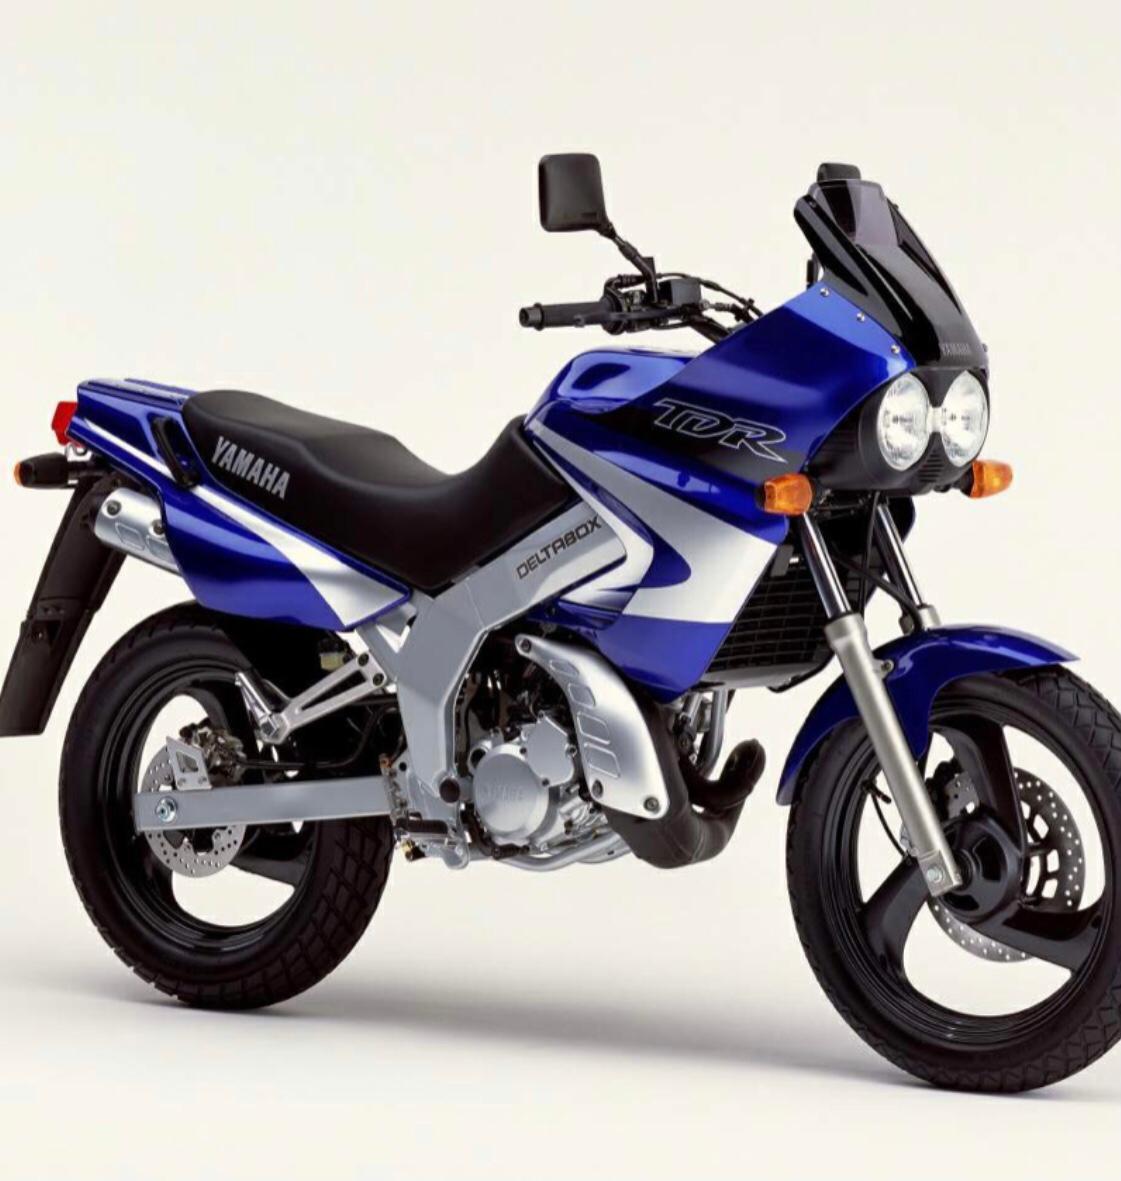 Yamaha TDR 125 picture